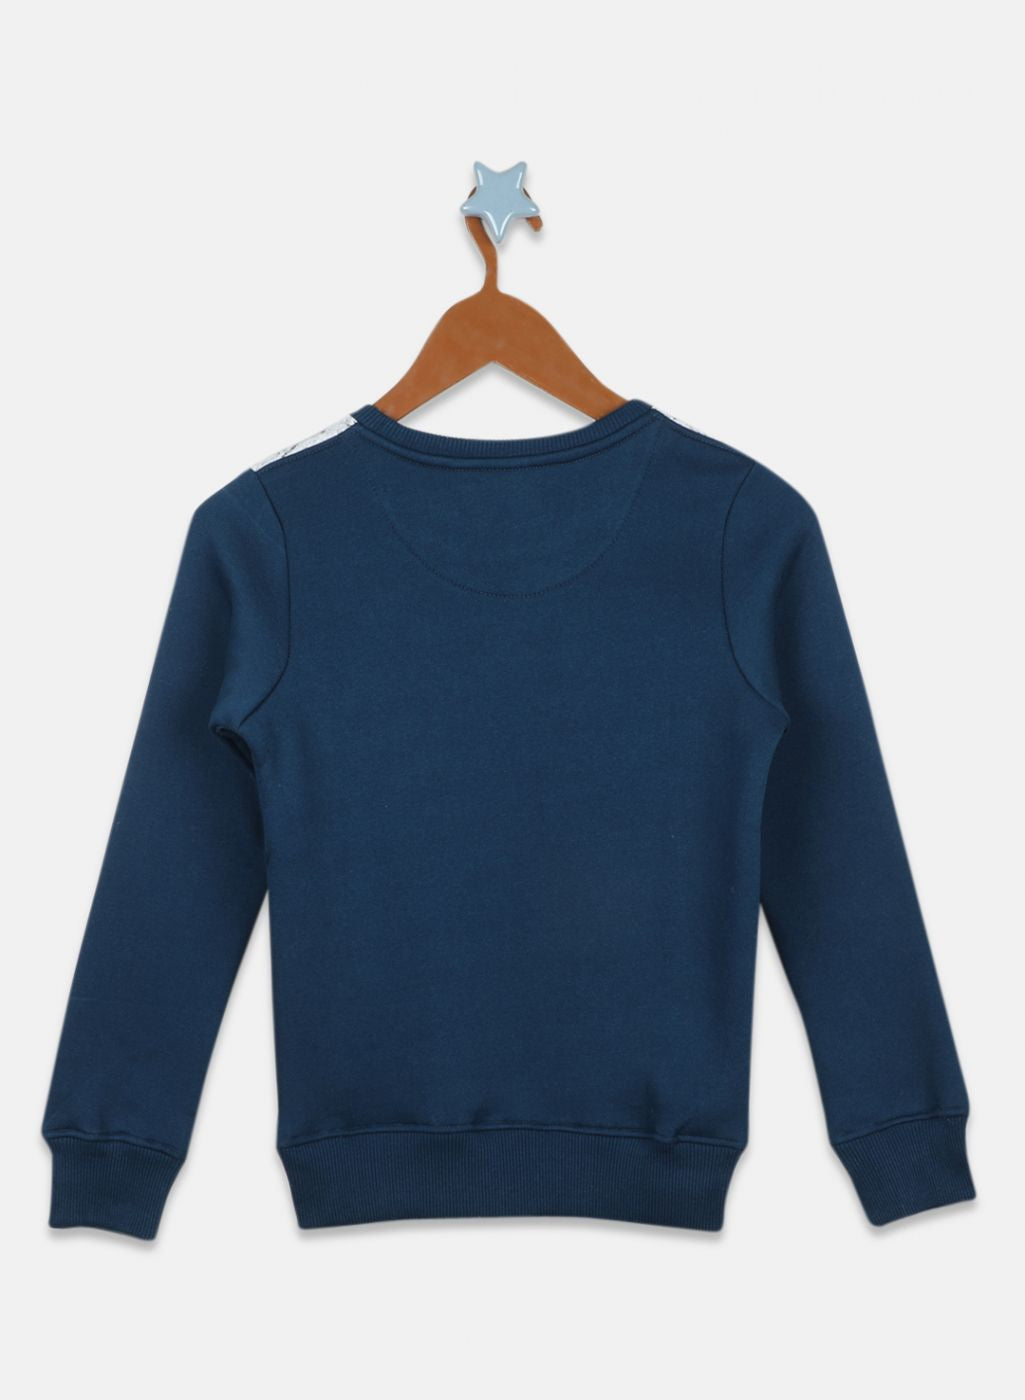 Boys Blue Printed Sweatshirt